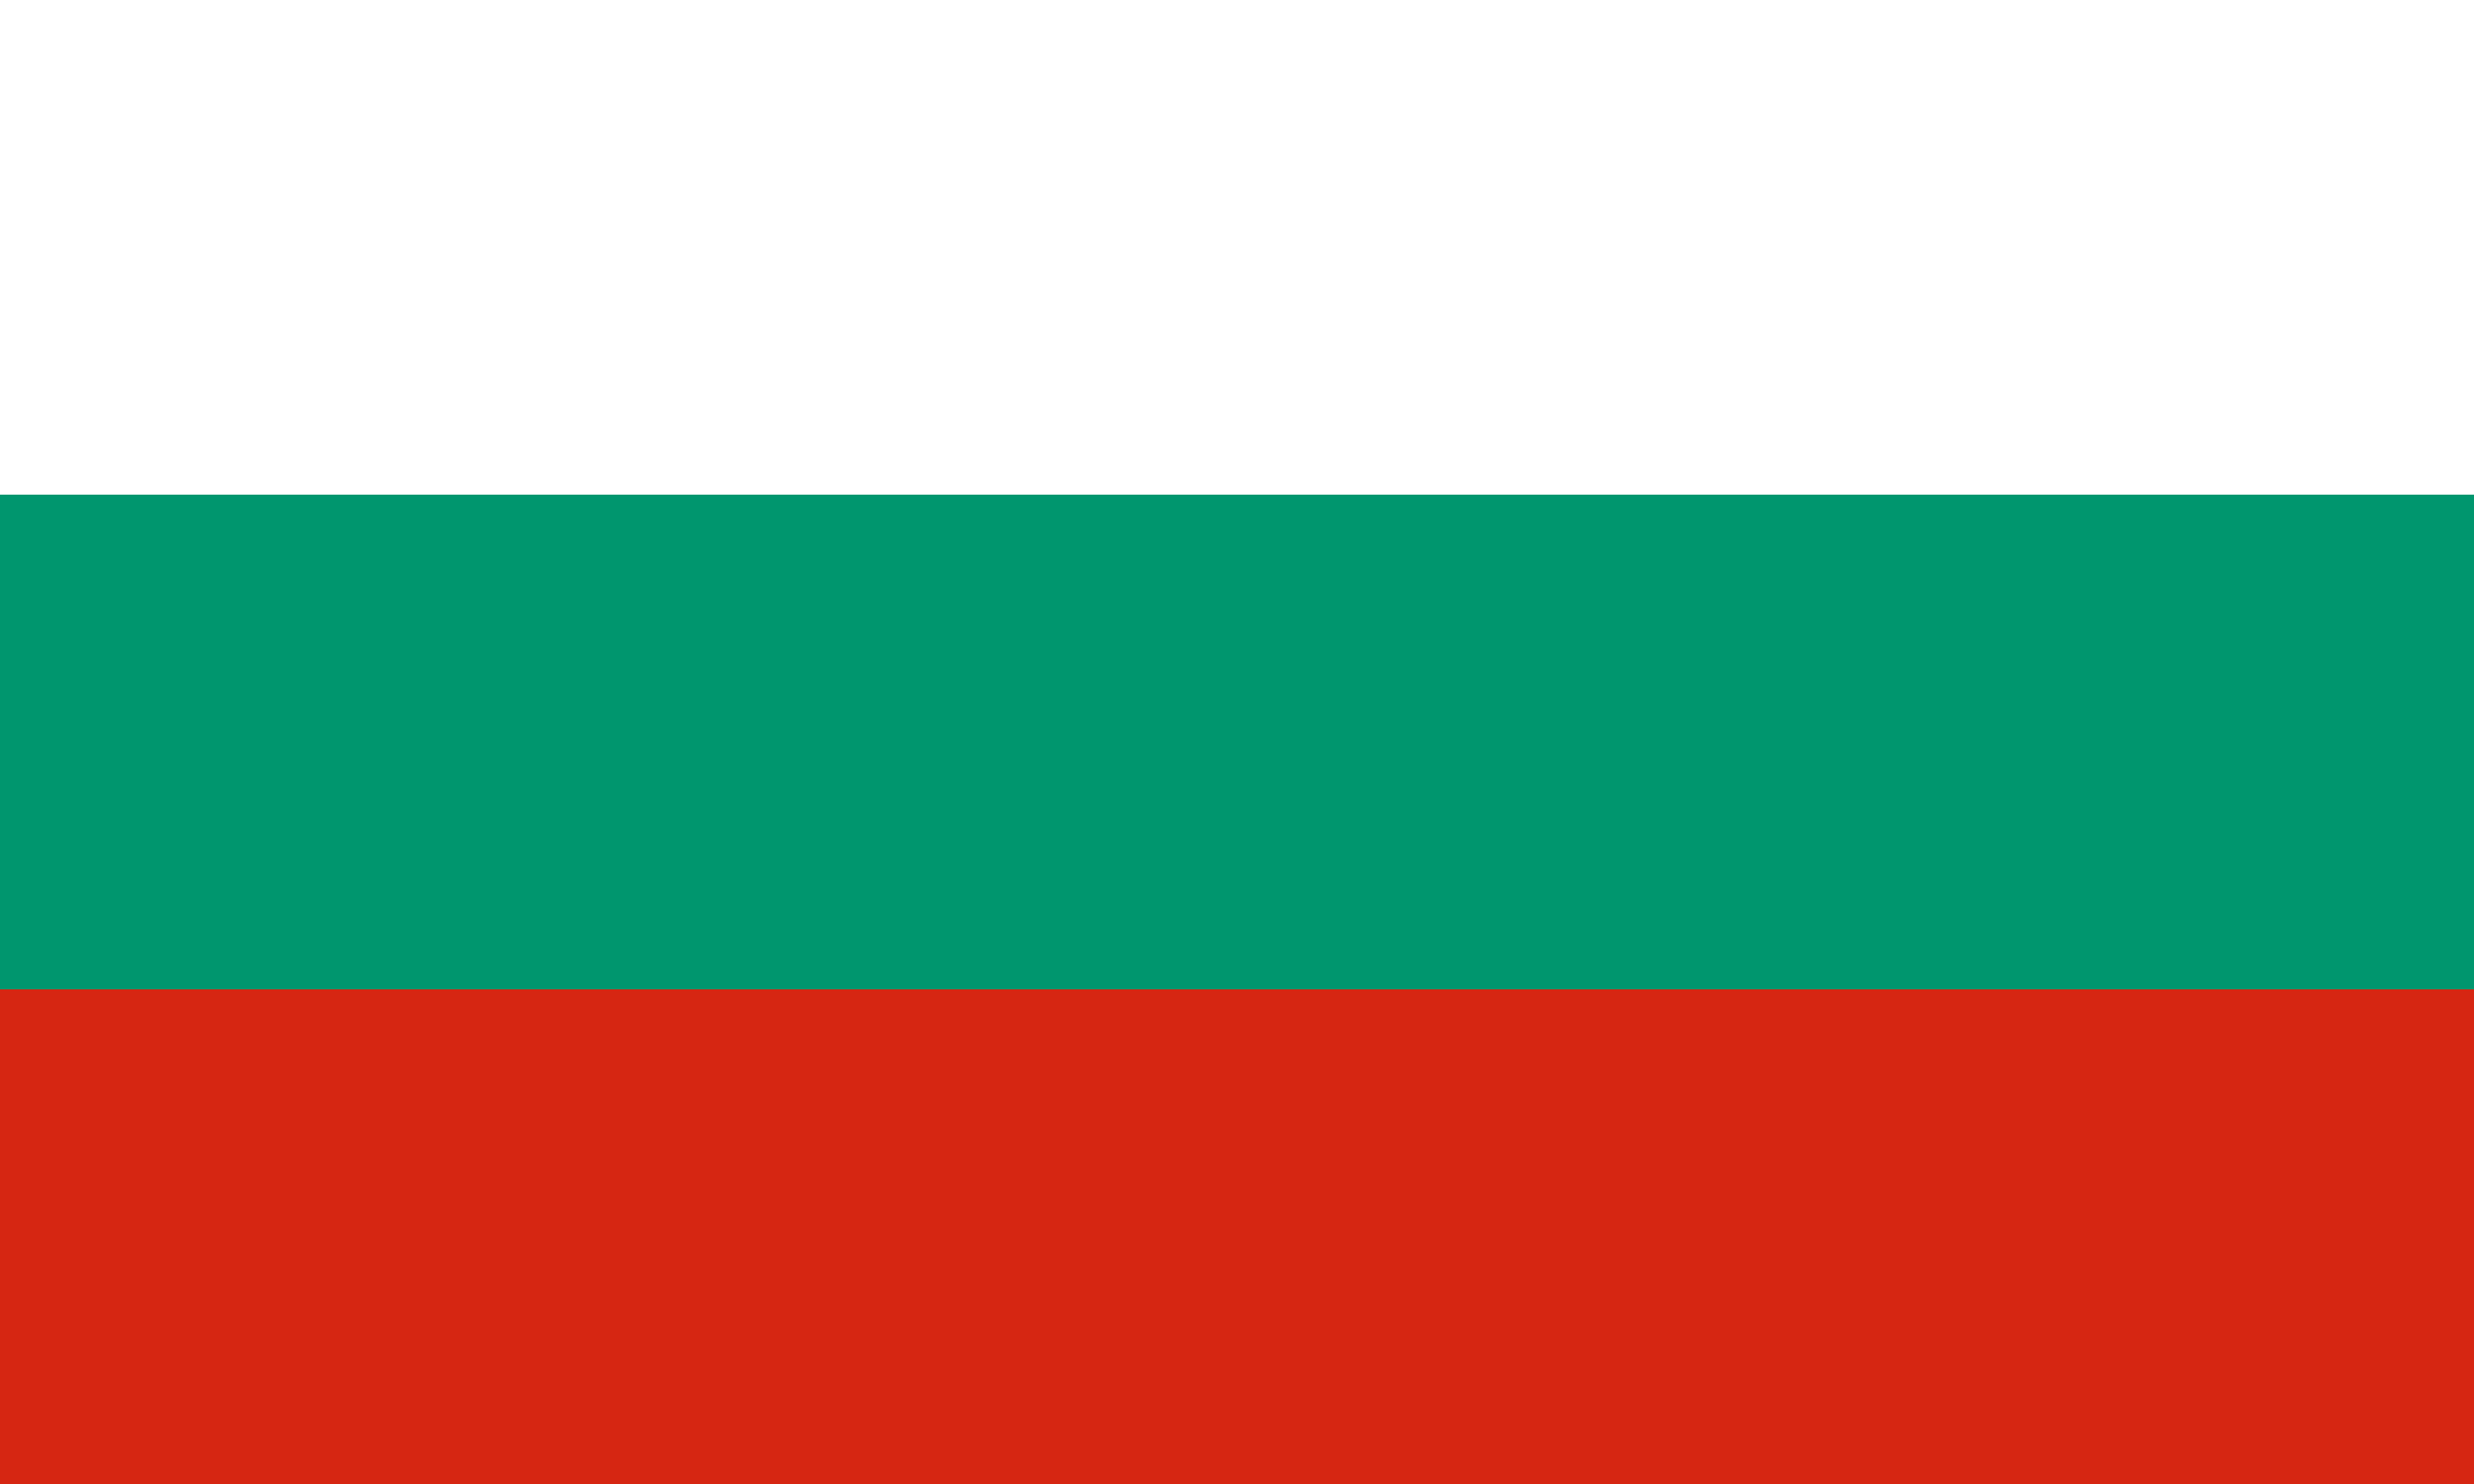 Bulgaria Flag Image - Free Download